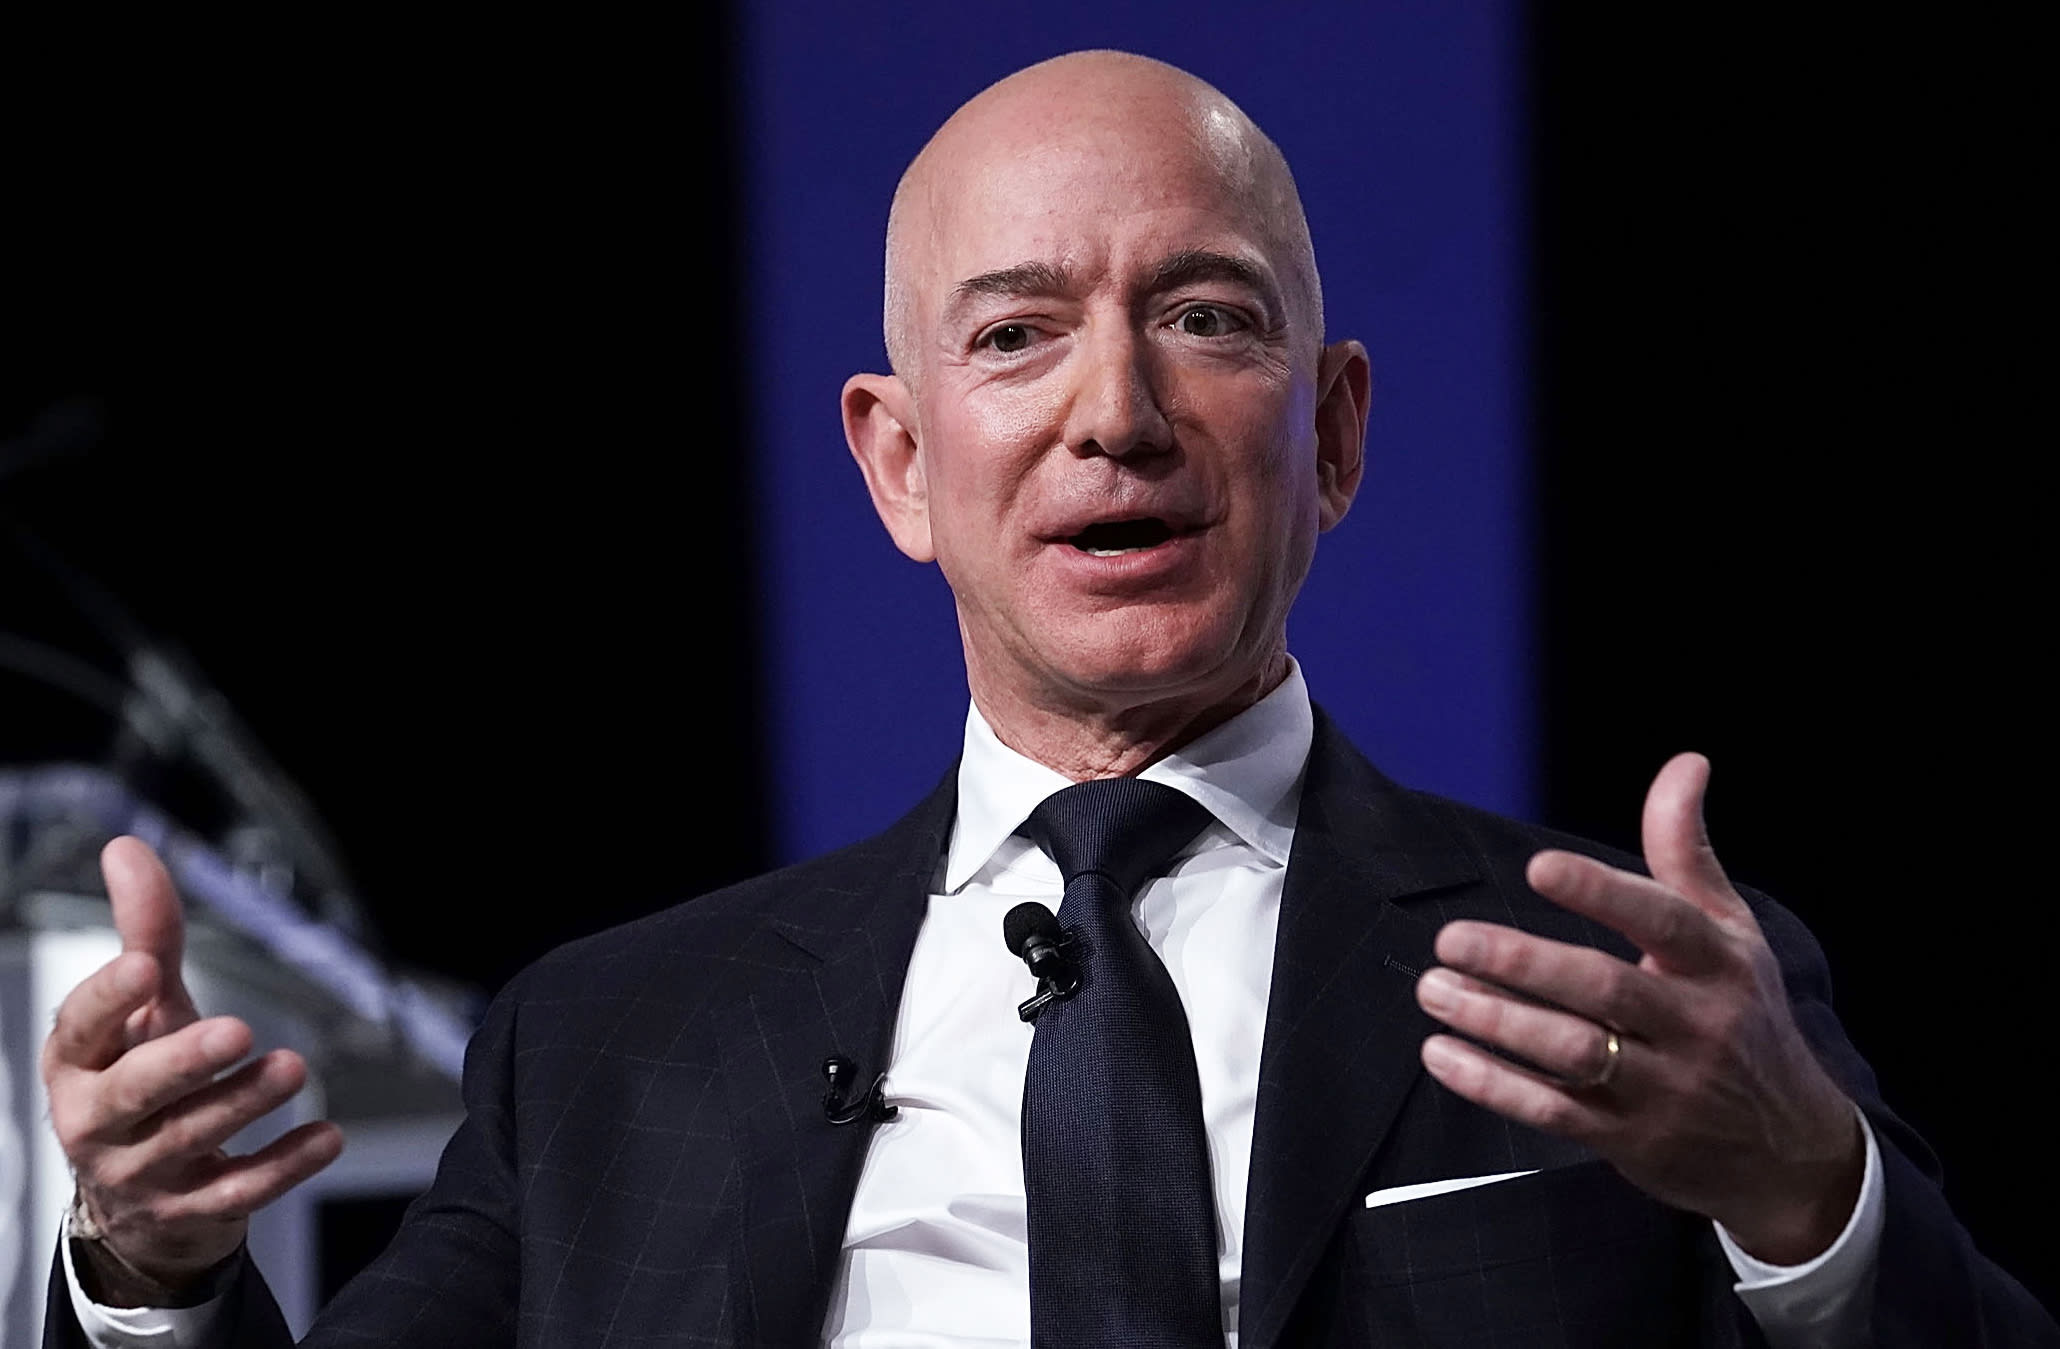 Jeff Bezos keeps his Amazon email address public